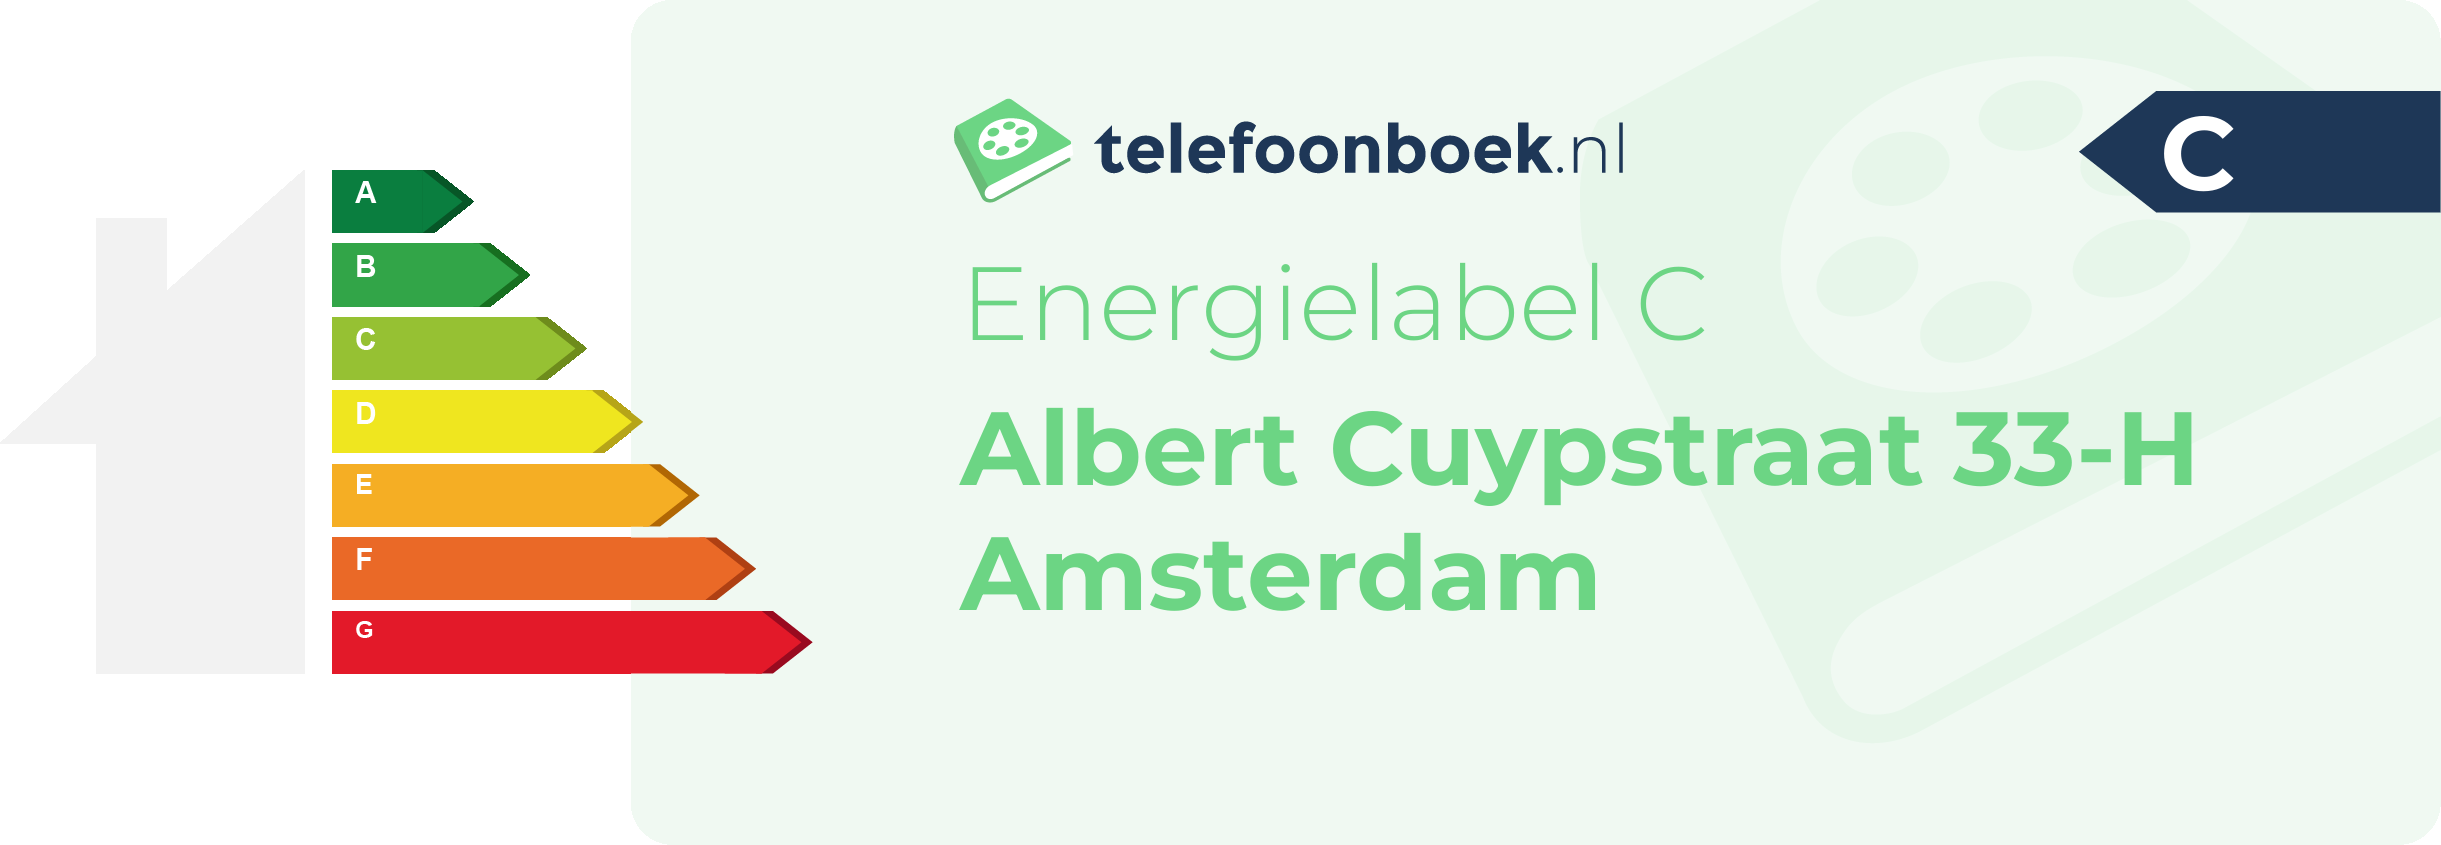 Energielabel Albert Cuypstraat 33-H Amsterdam